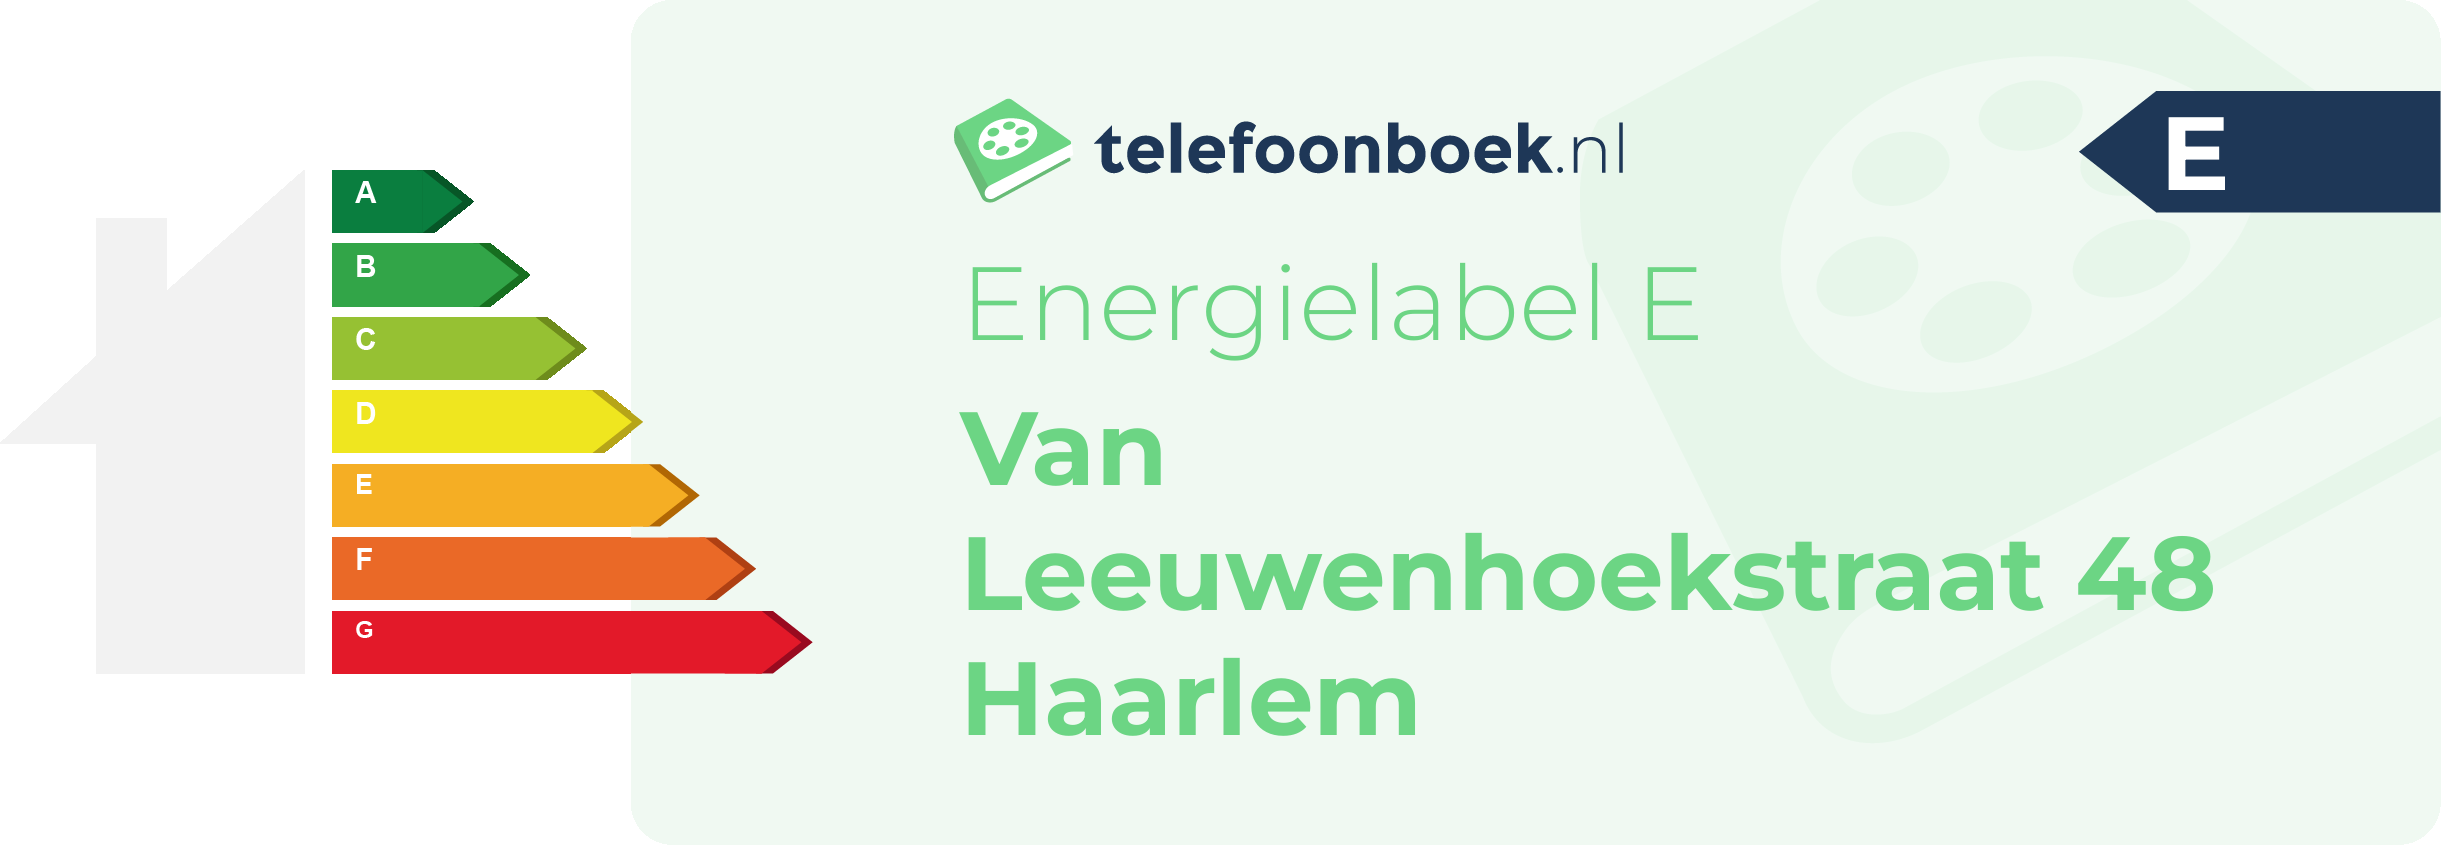 Energielabel Van Leeuwenhoekstraat 48 Haarlem